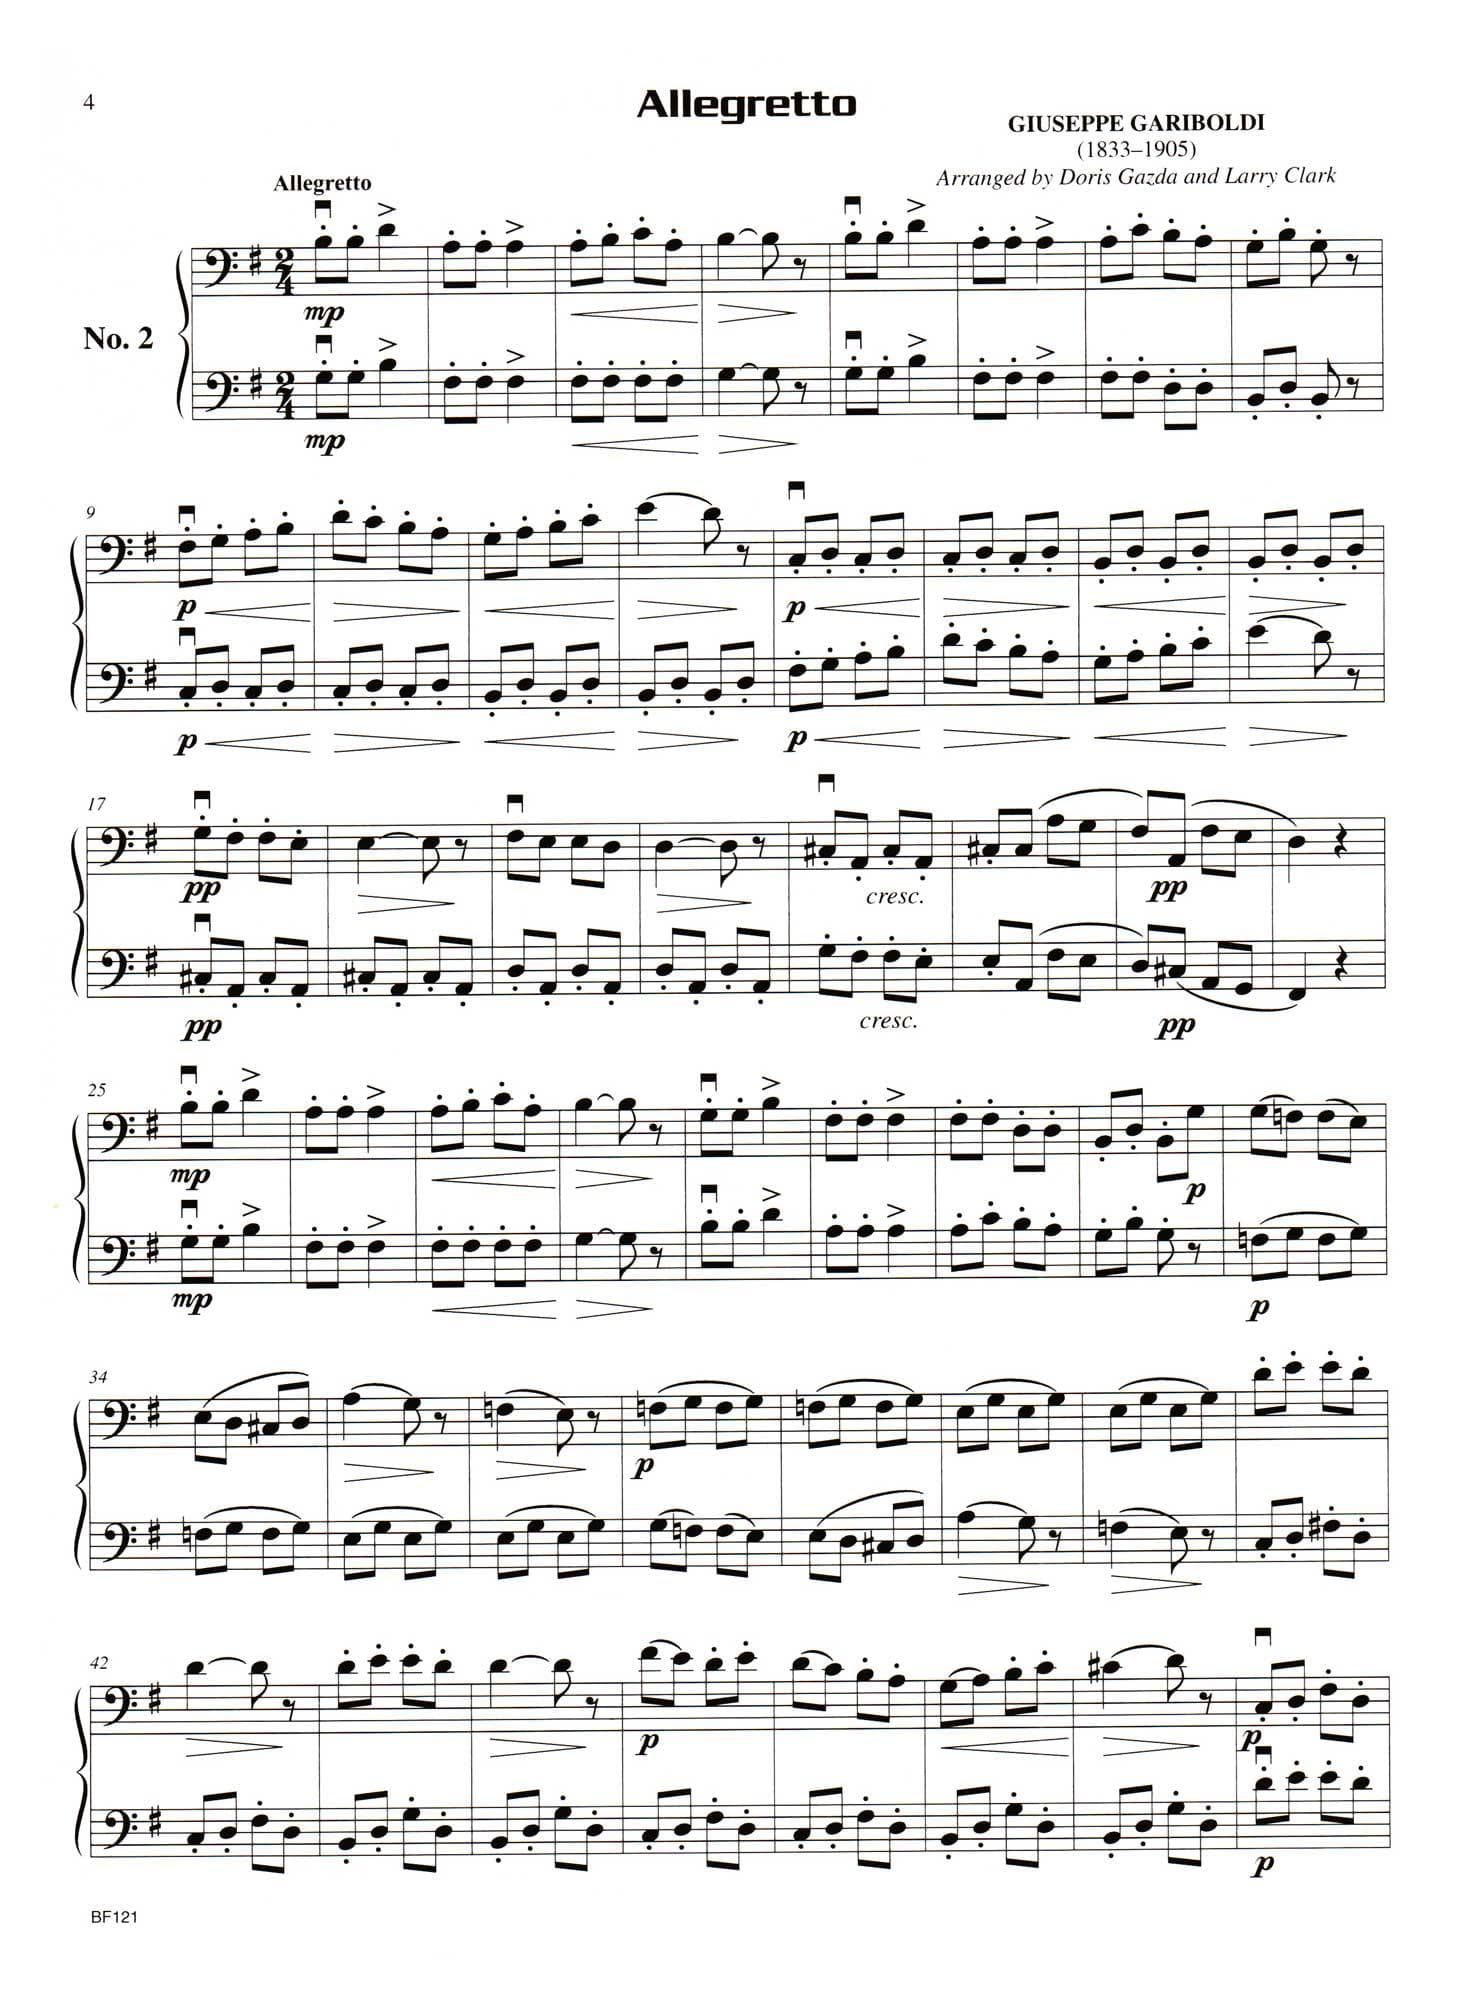 Gazda / Clark - Compatible Duets for Strings Volume II - Bass - Carl Fischer